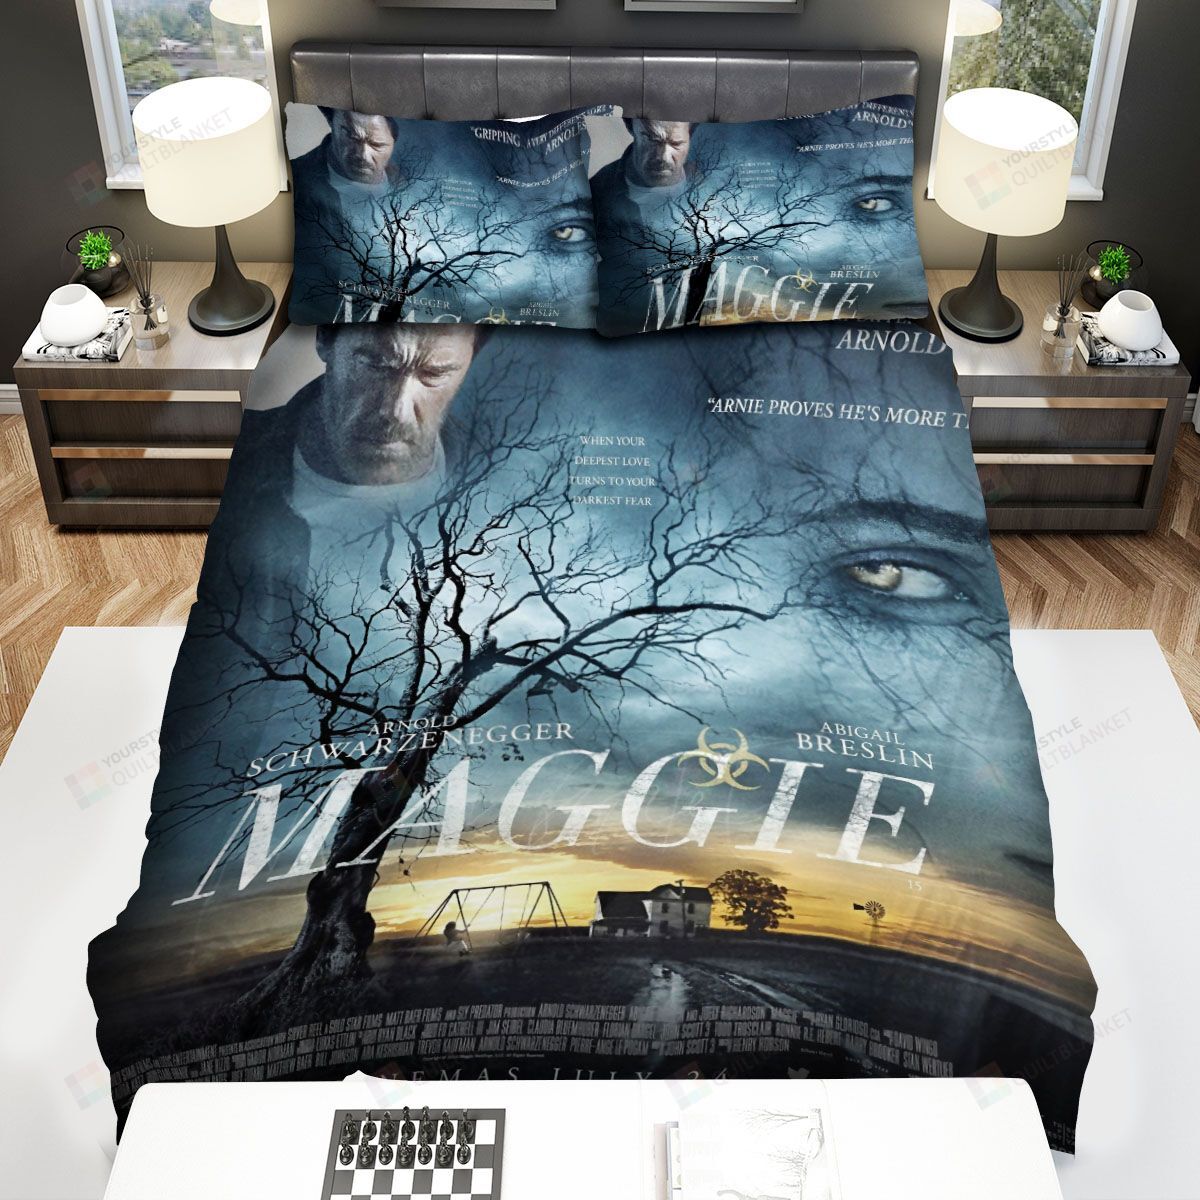 Maggie (I) Movie Poster Iv Photo Bed Sheets Spread Comforter Duvet Cover Bedding Sets